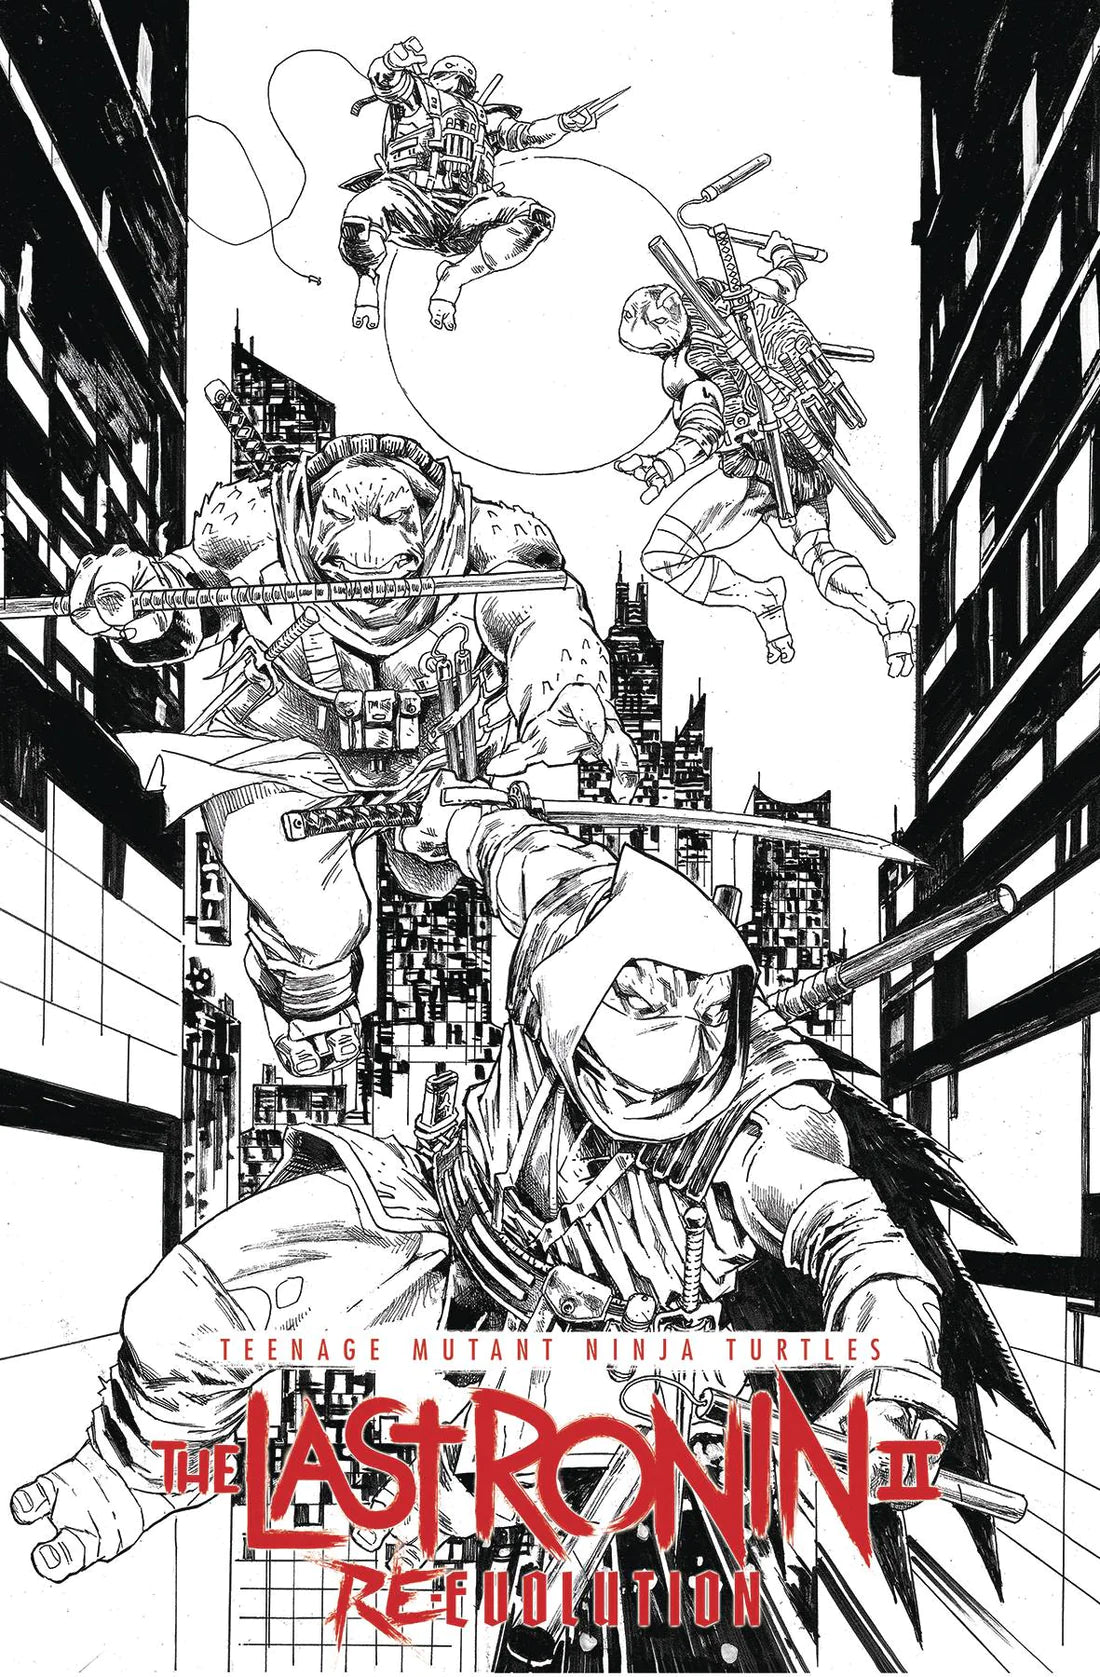 Teenage Mutant Ninja Turtles: The Last Ronin II - Re-Evolution #1 Incentive Cover 1:75 by Escorza